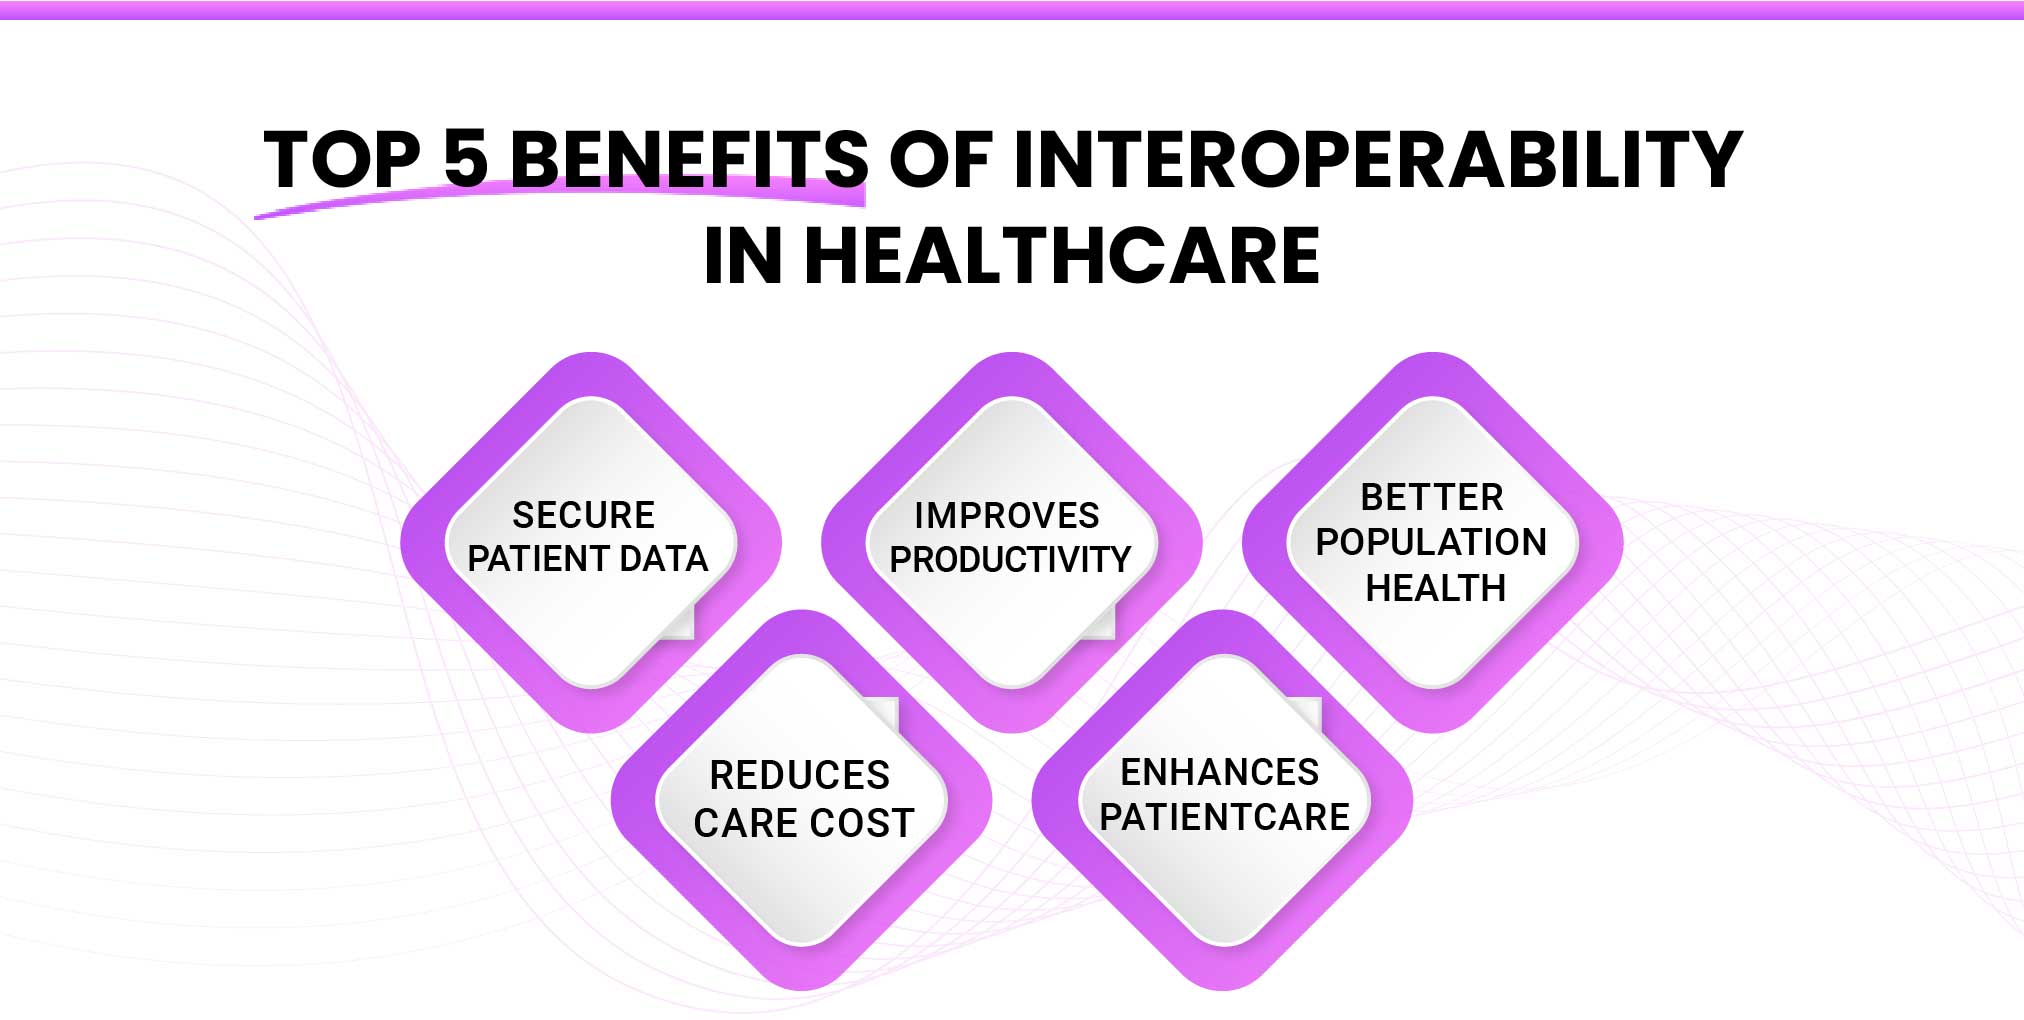 Top 5 Benefits of Interoperability in Healthcare